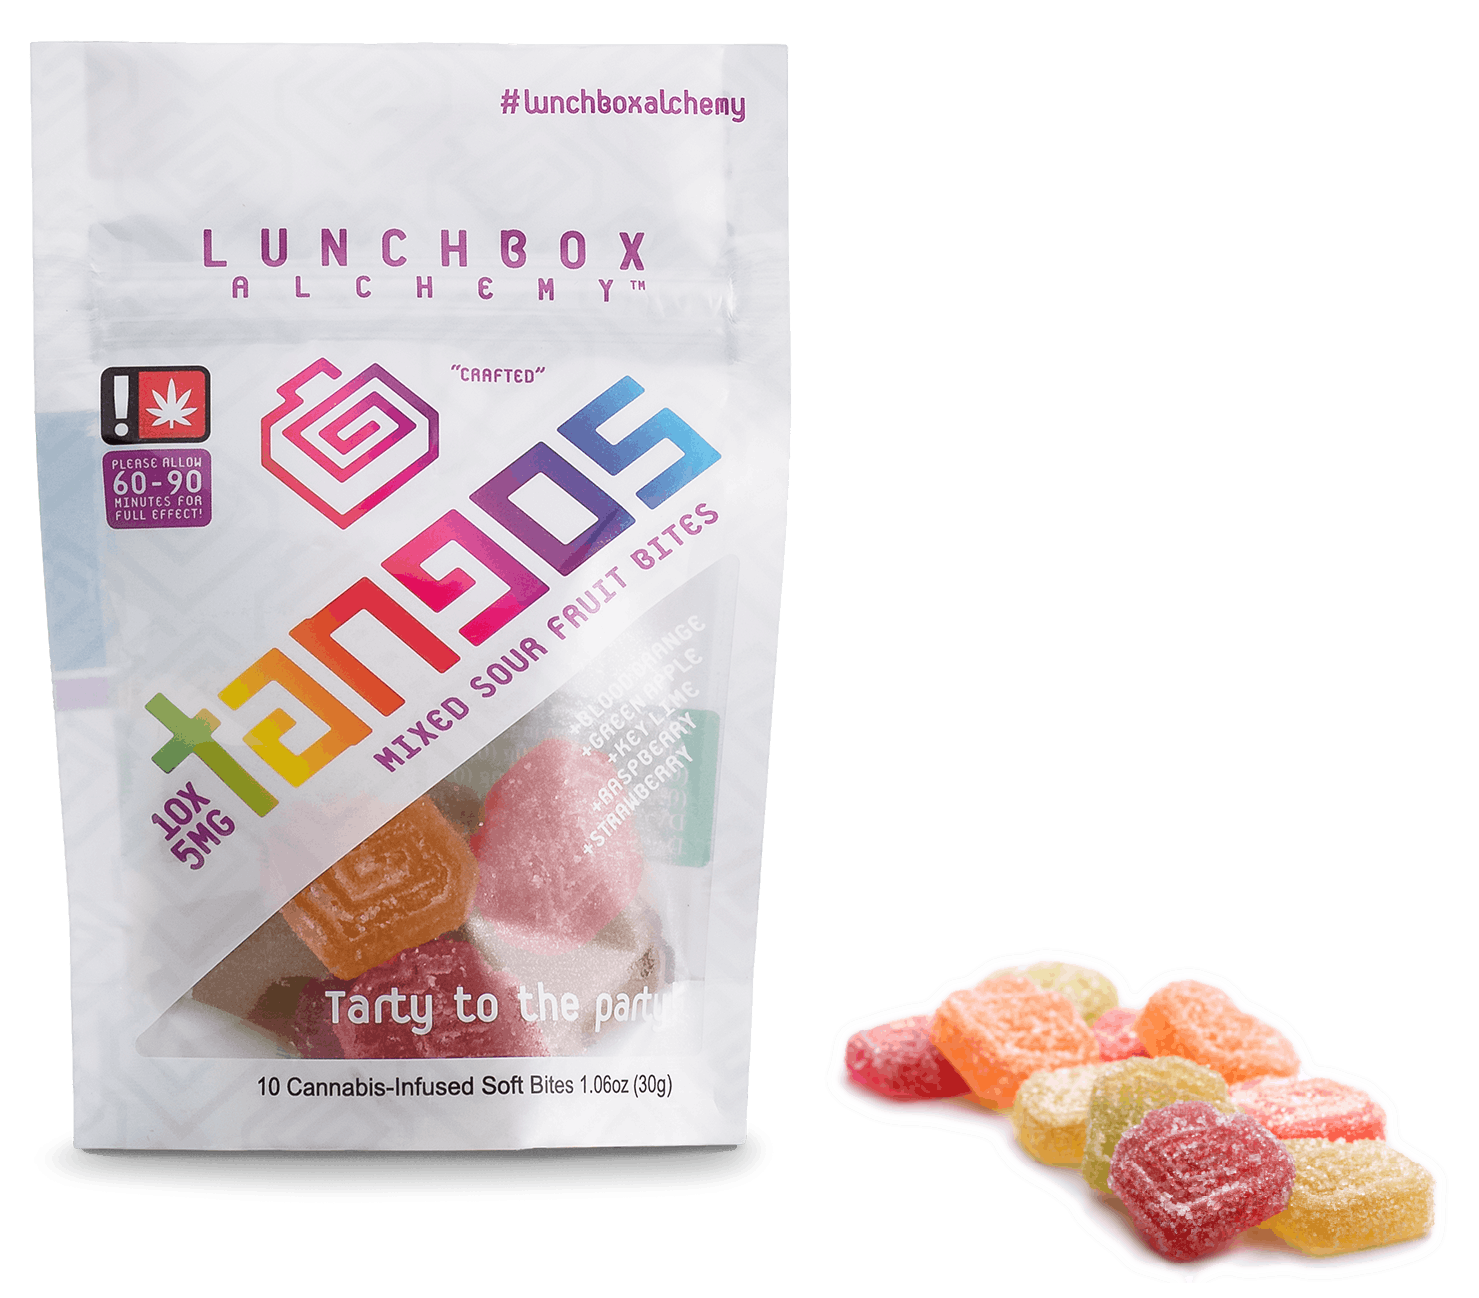 edible-lunchbox-alchemy-tangos-1-06-oz-50mg